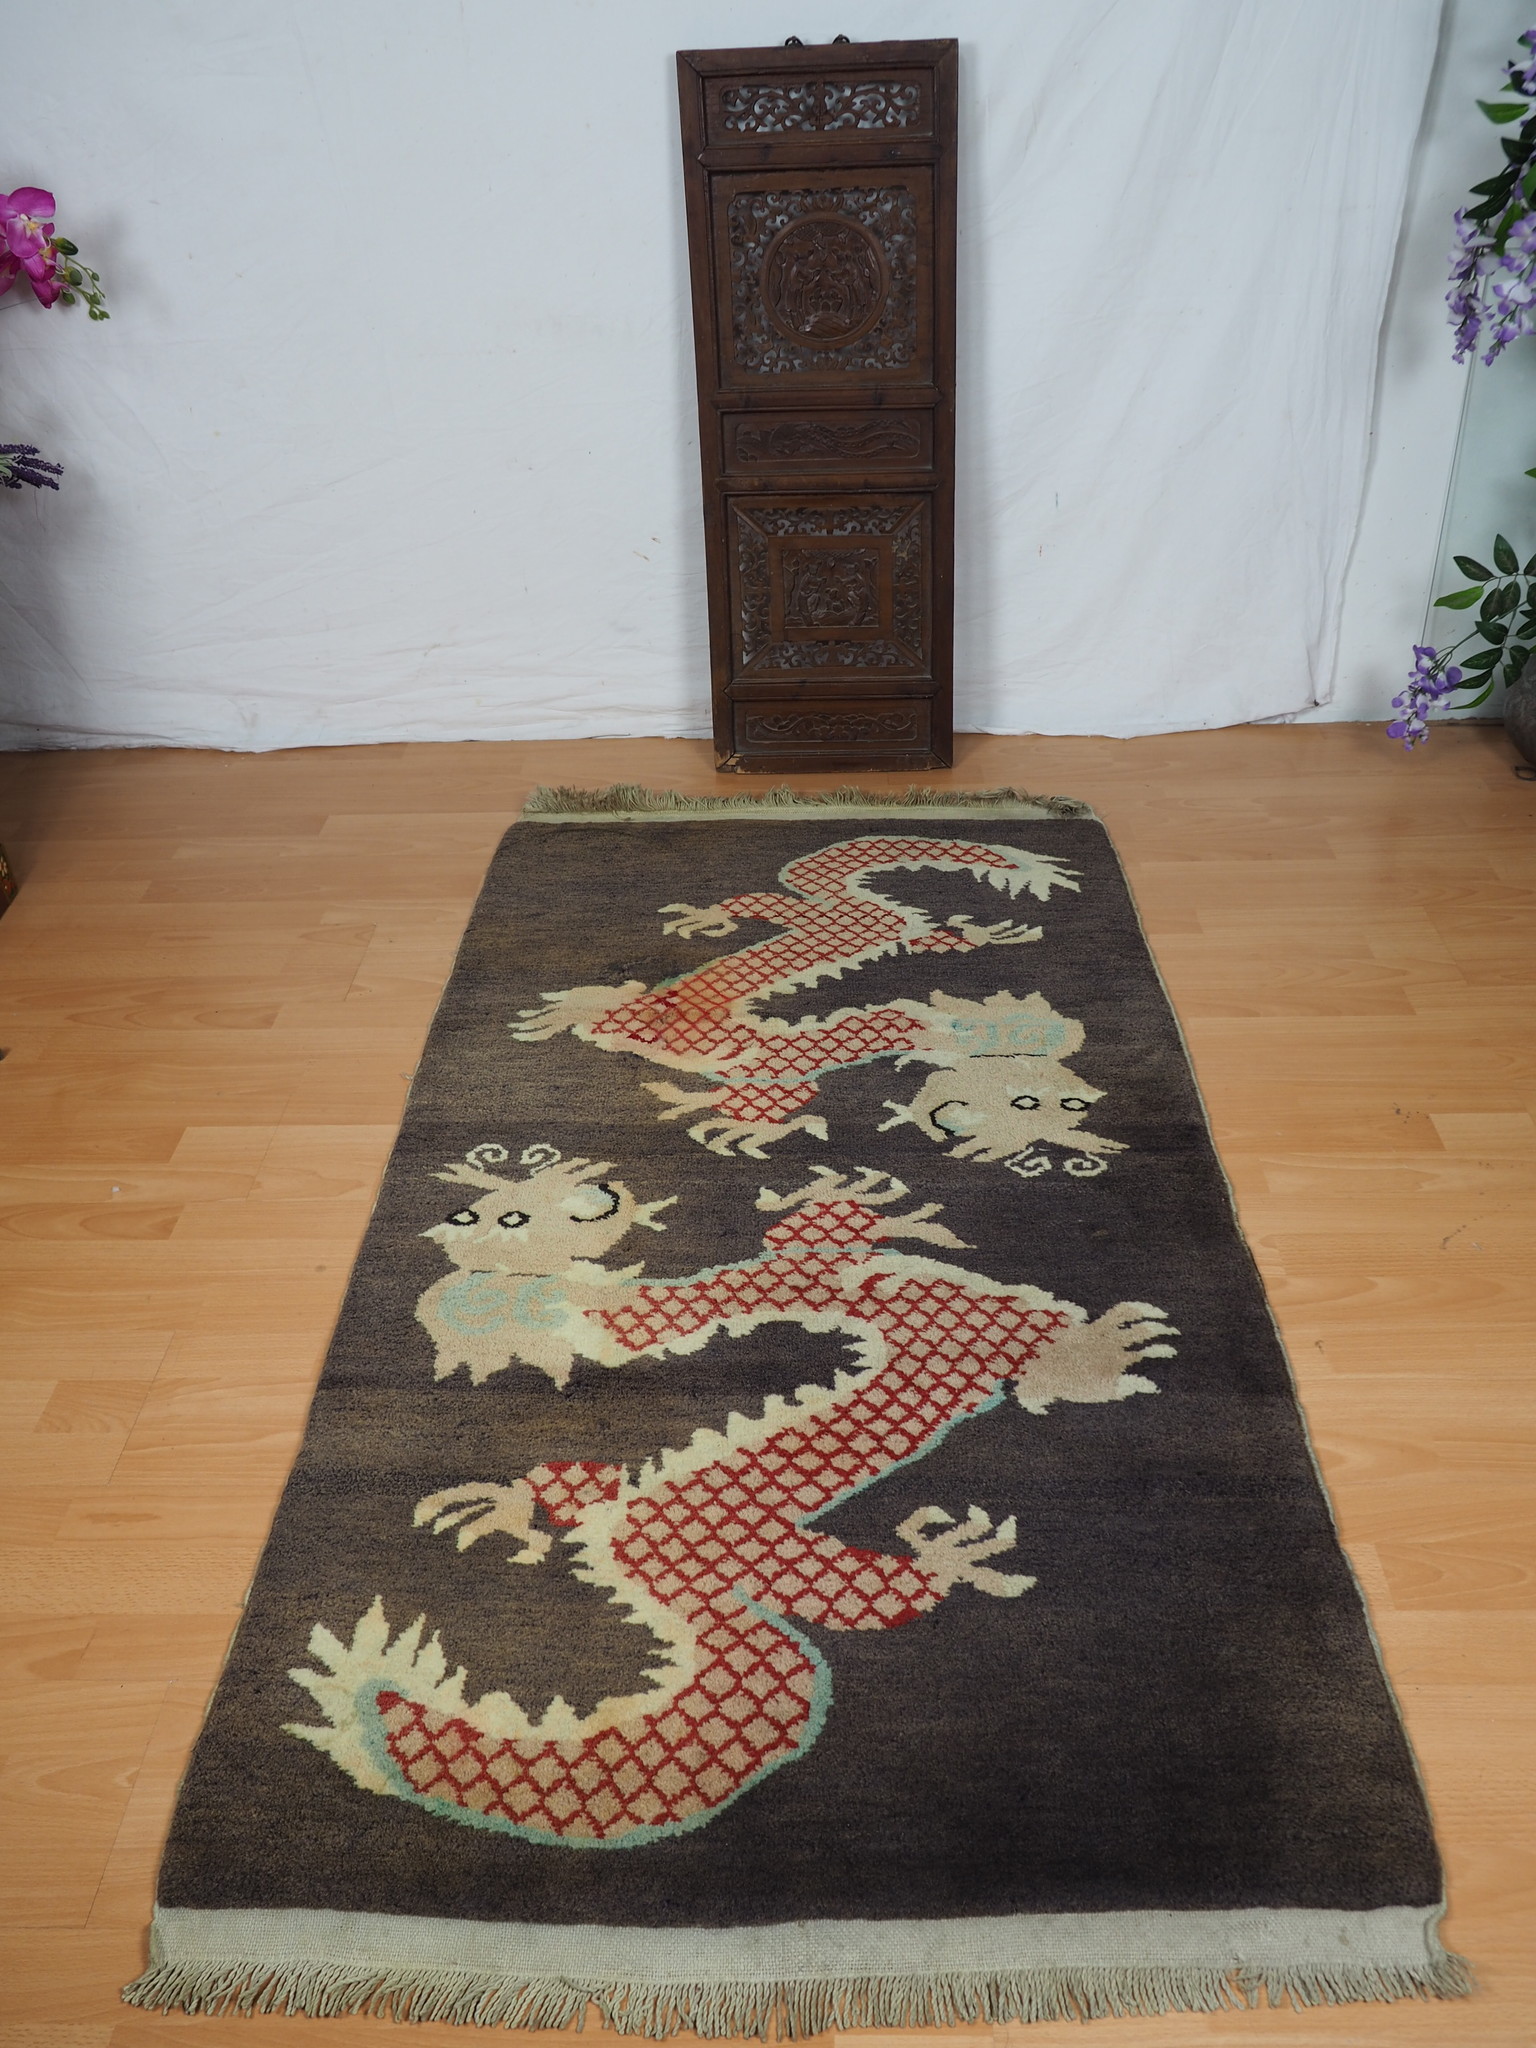 67"x35" inch   Rare antique oriental hand Knotted Tibetan Khaden sleeping Dragons Carpet No:3